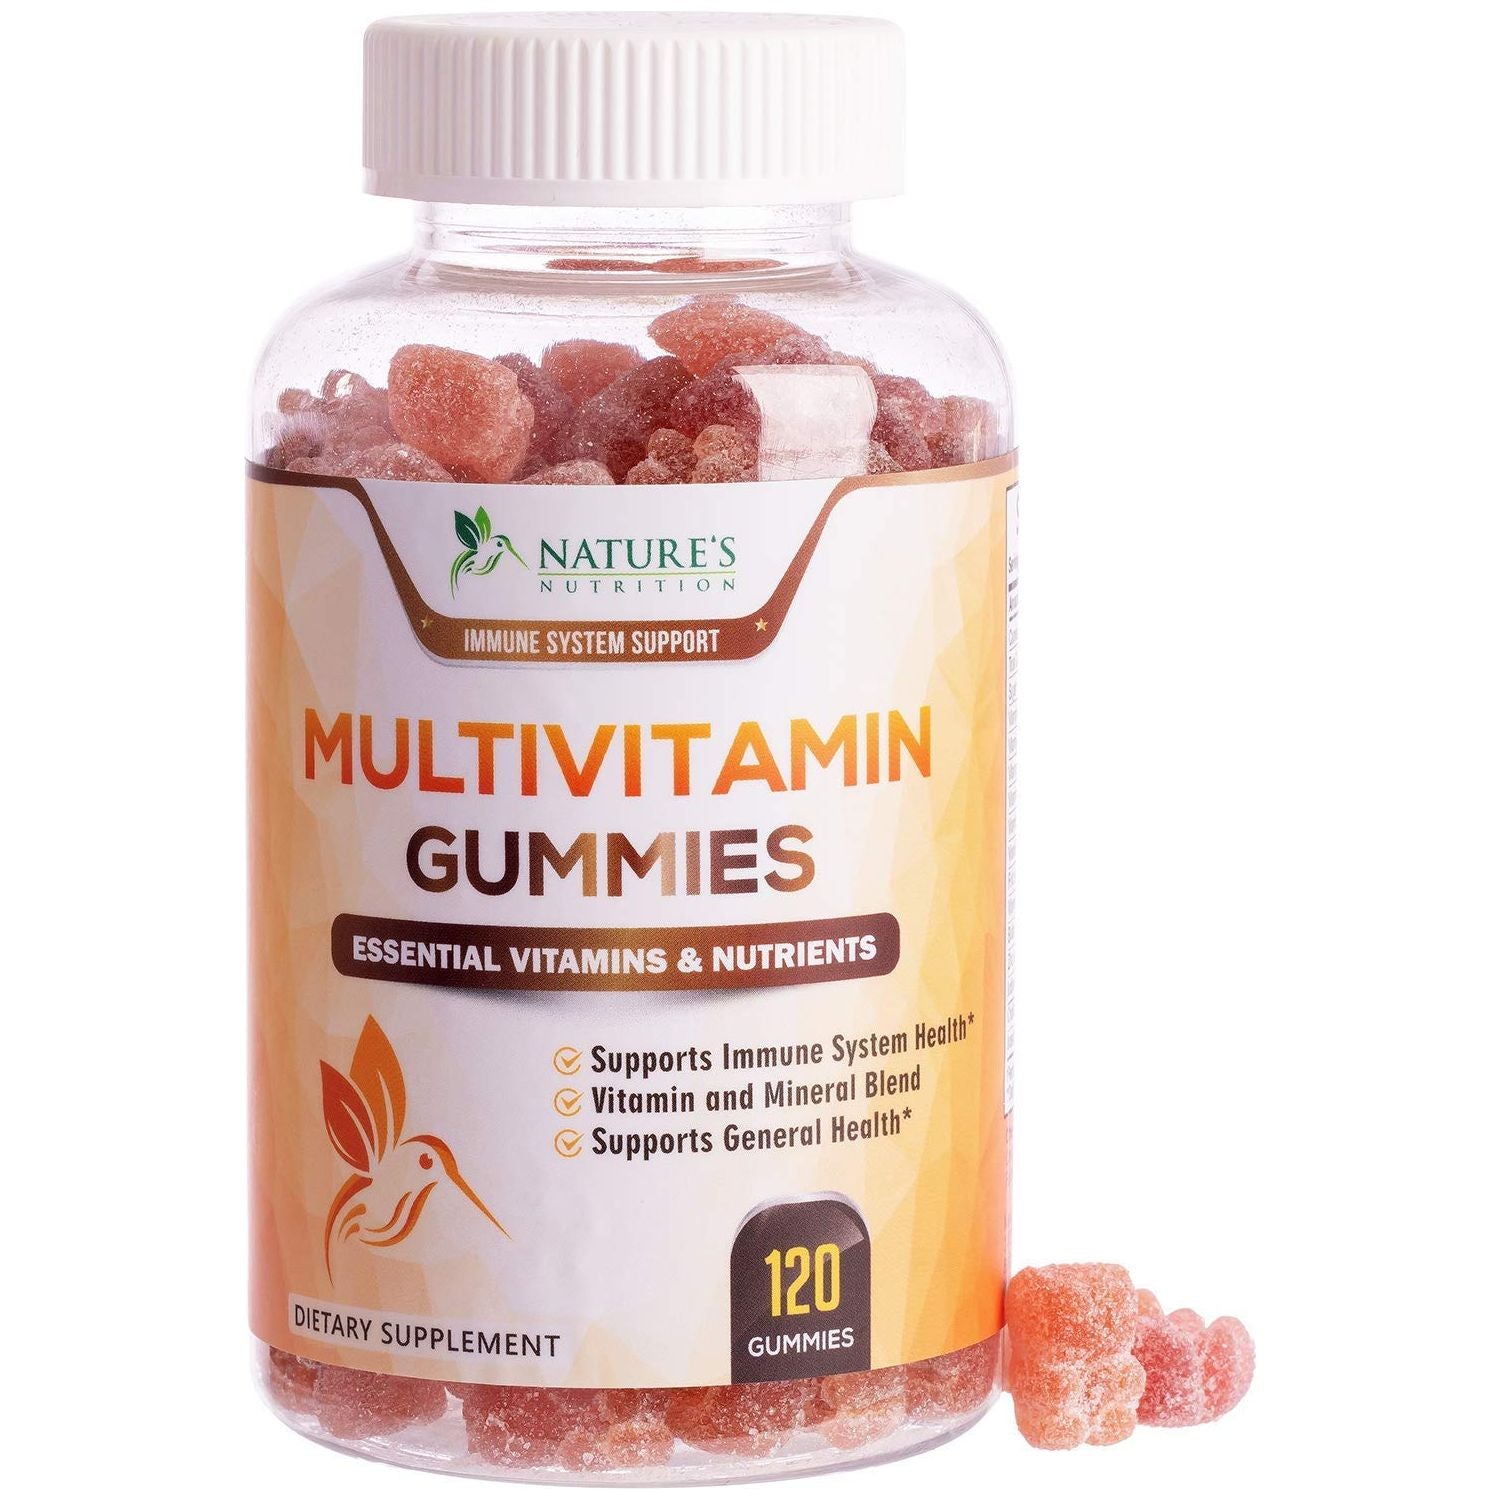 MegaFood Women's Multi - Multivitamin for Women - Gummy Vitamins - Vitamin  C, Vitamin D, Zinc, Vitamin B12 & Choline - Immune Support & Bone Health 